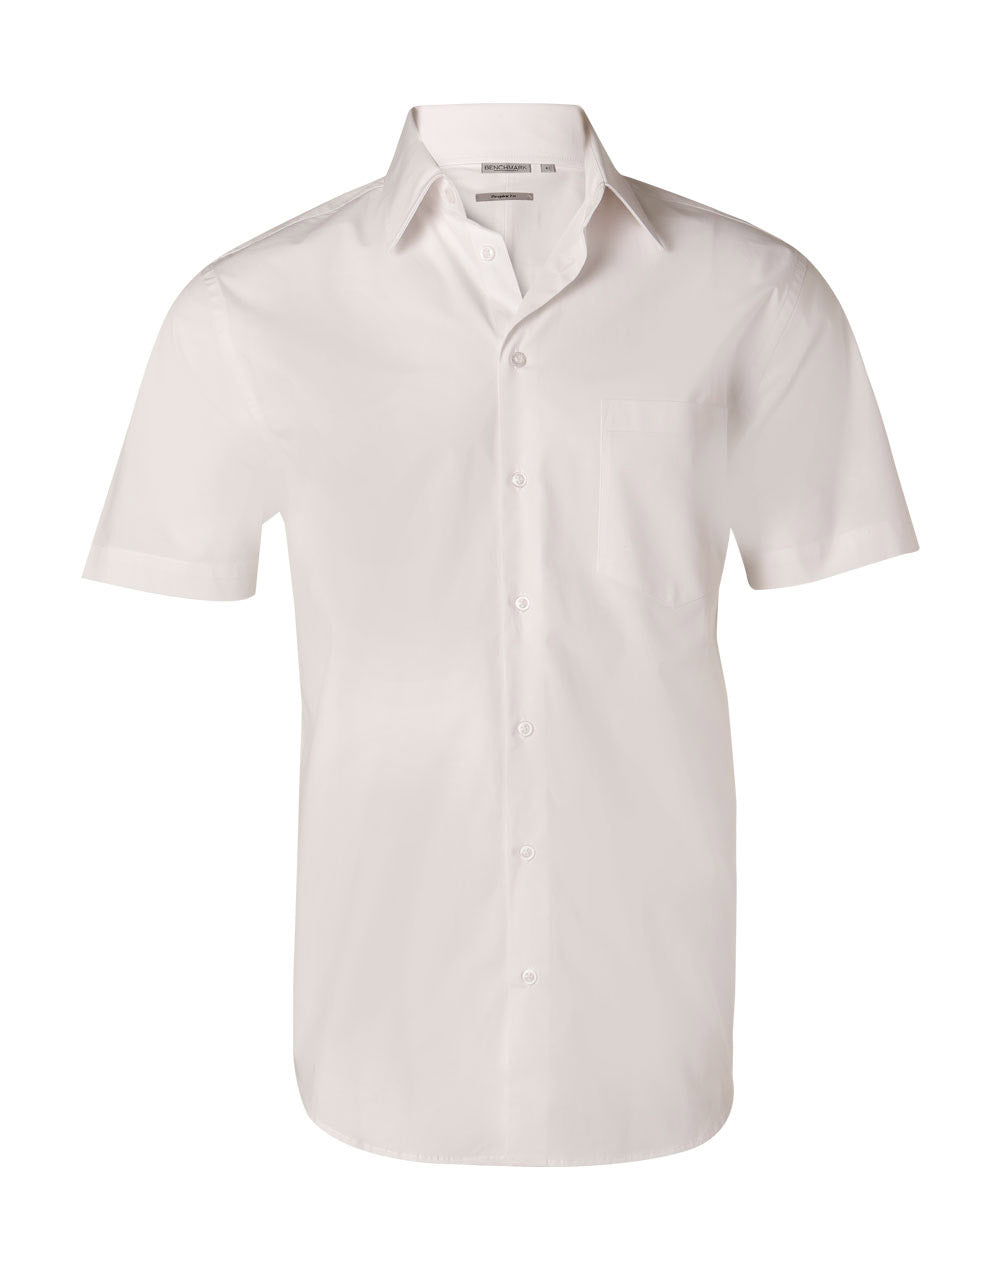 JCM7020S Men's Cotton/Poly Stretch Short Sleeve Shirt